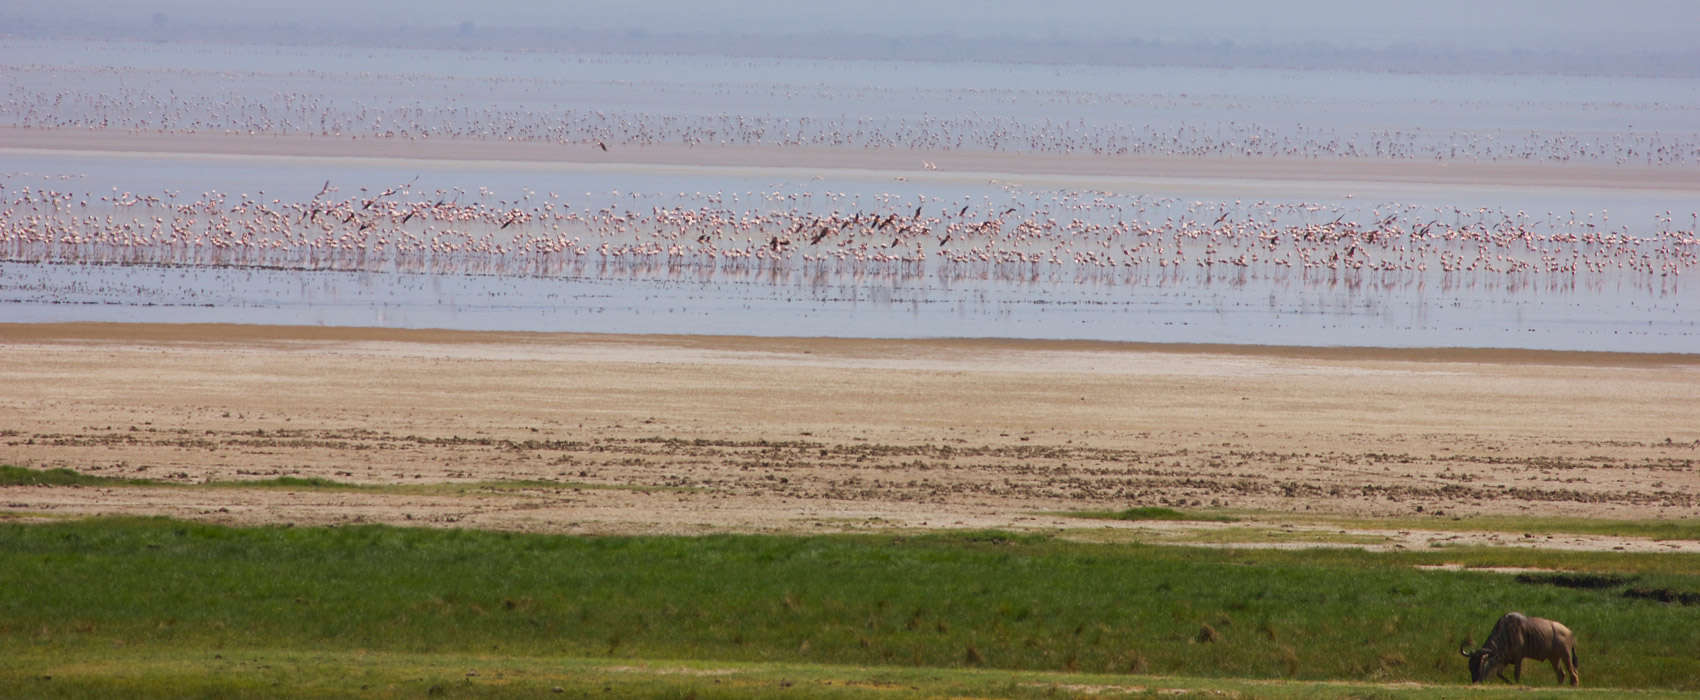 African Lake Manyara National Park Safari birds